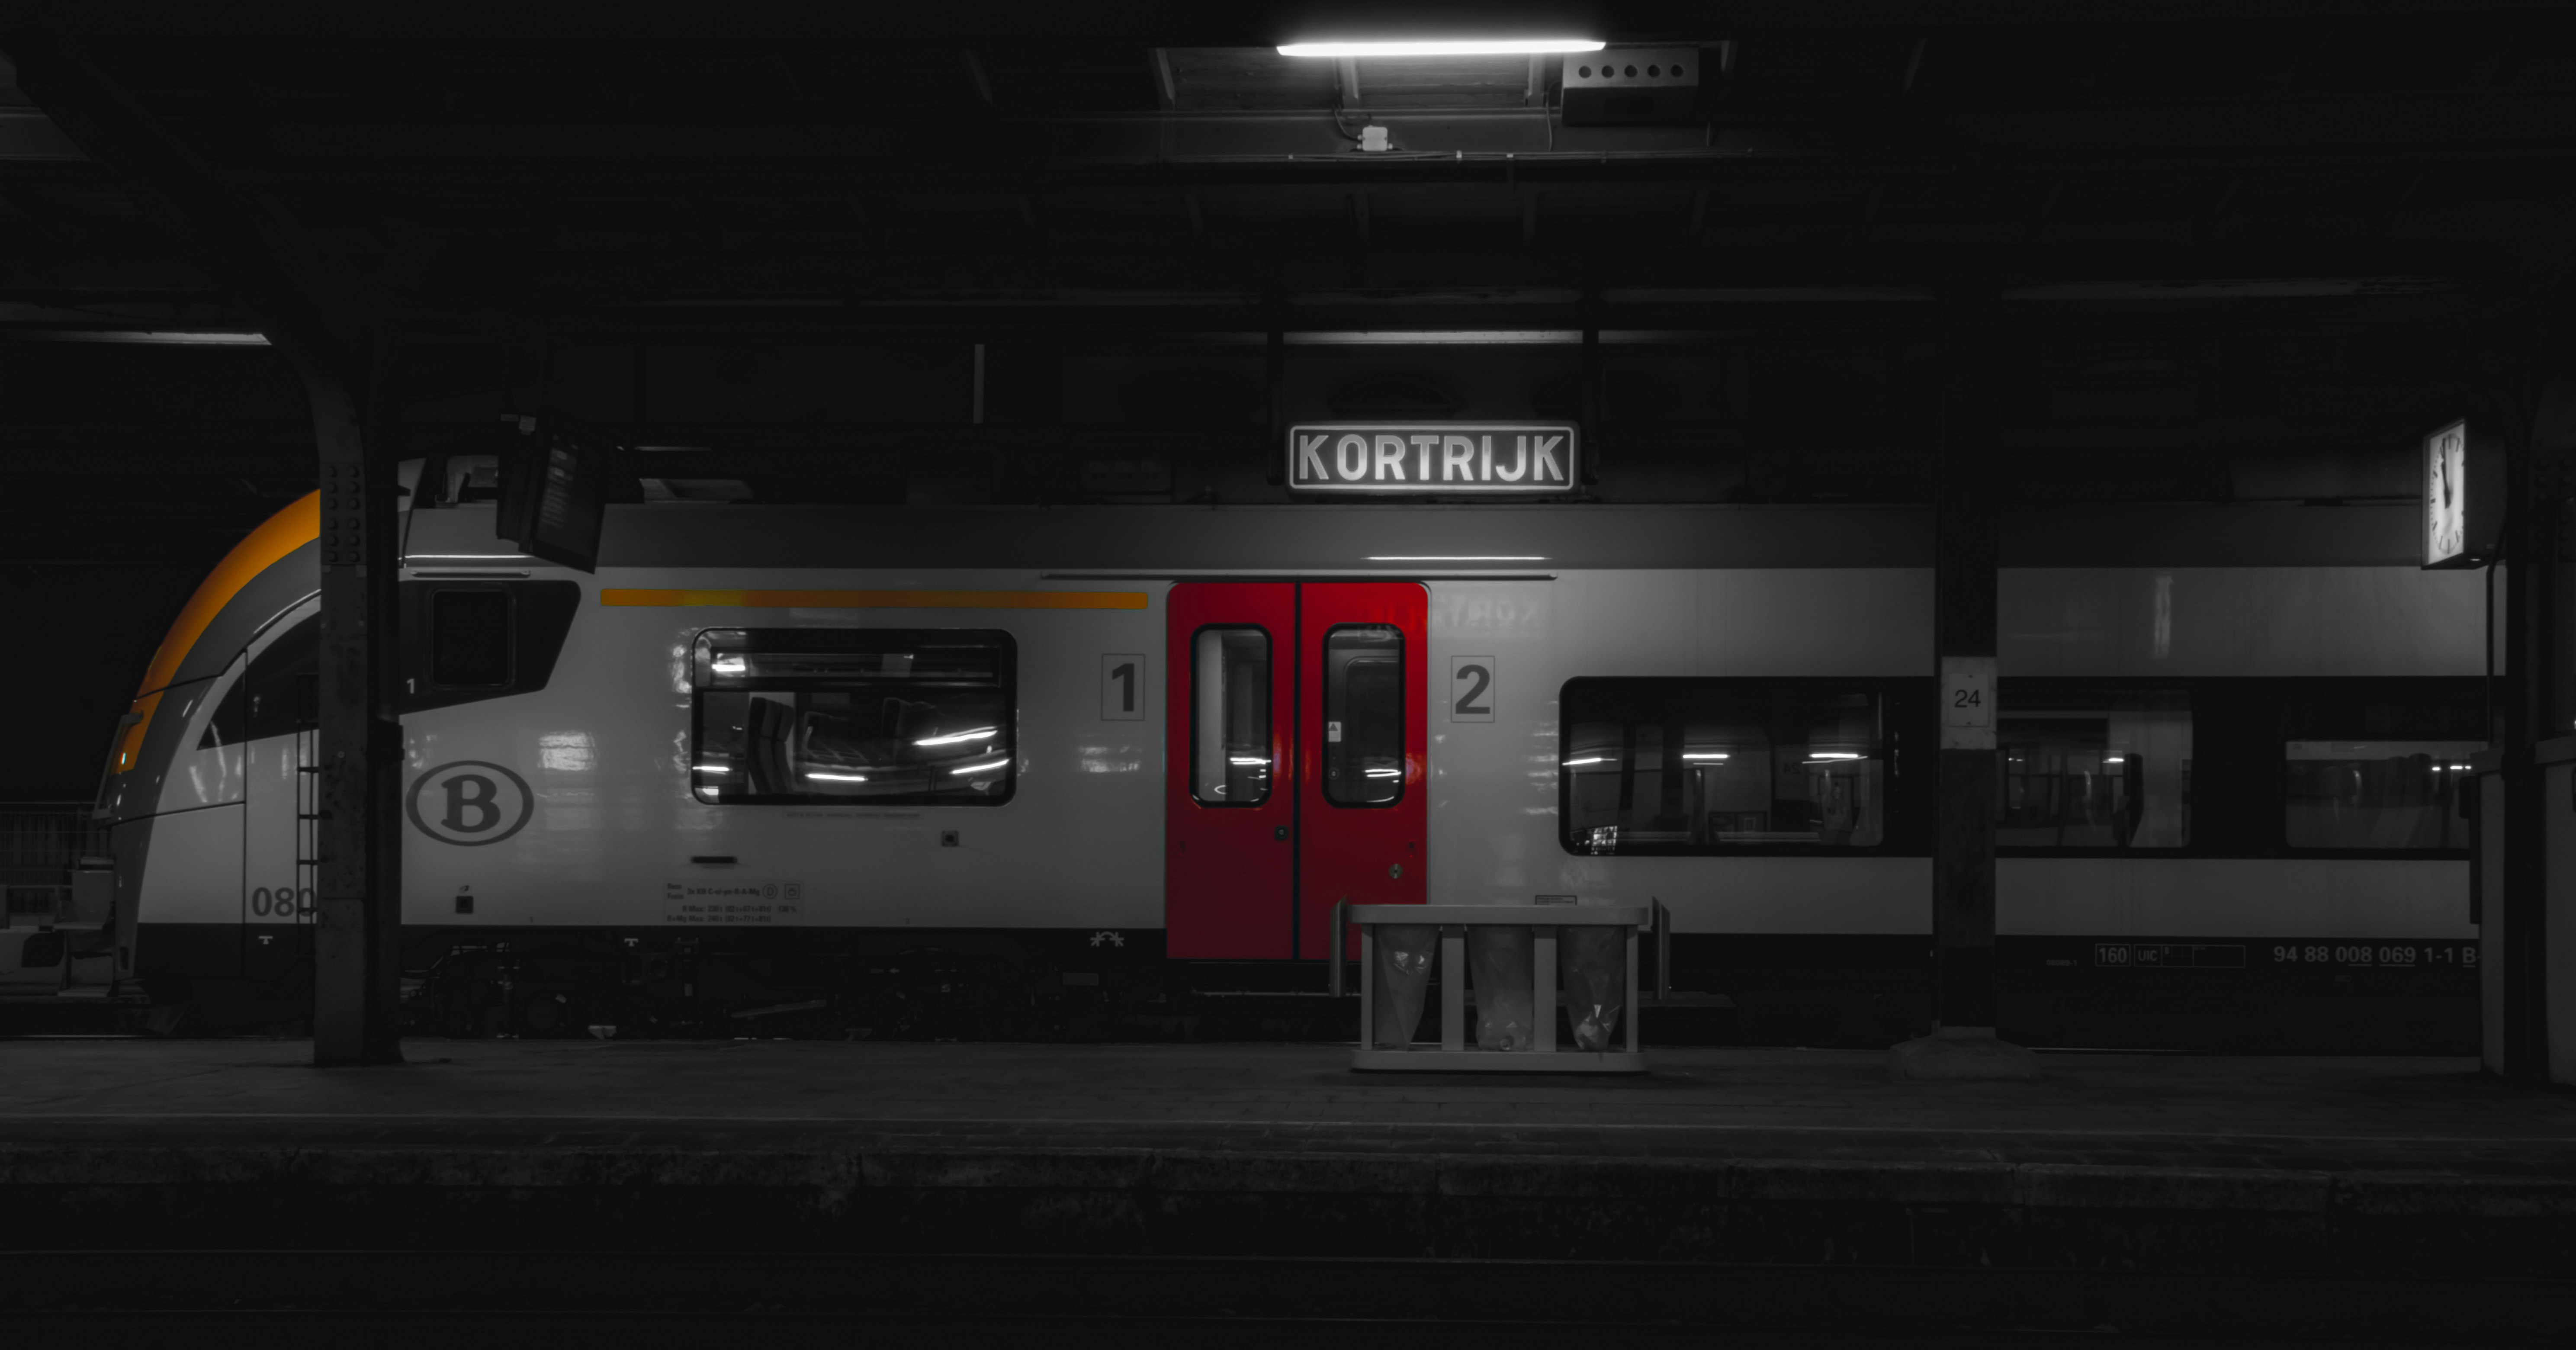 black and white train in a dark room